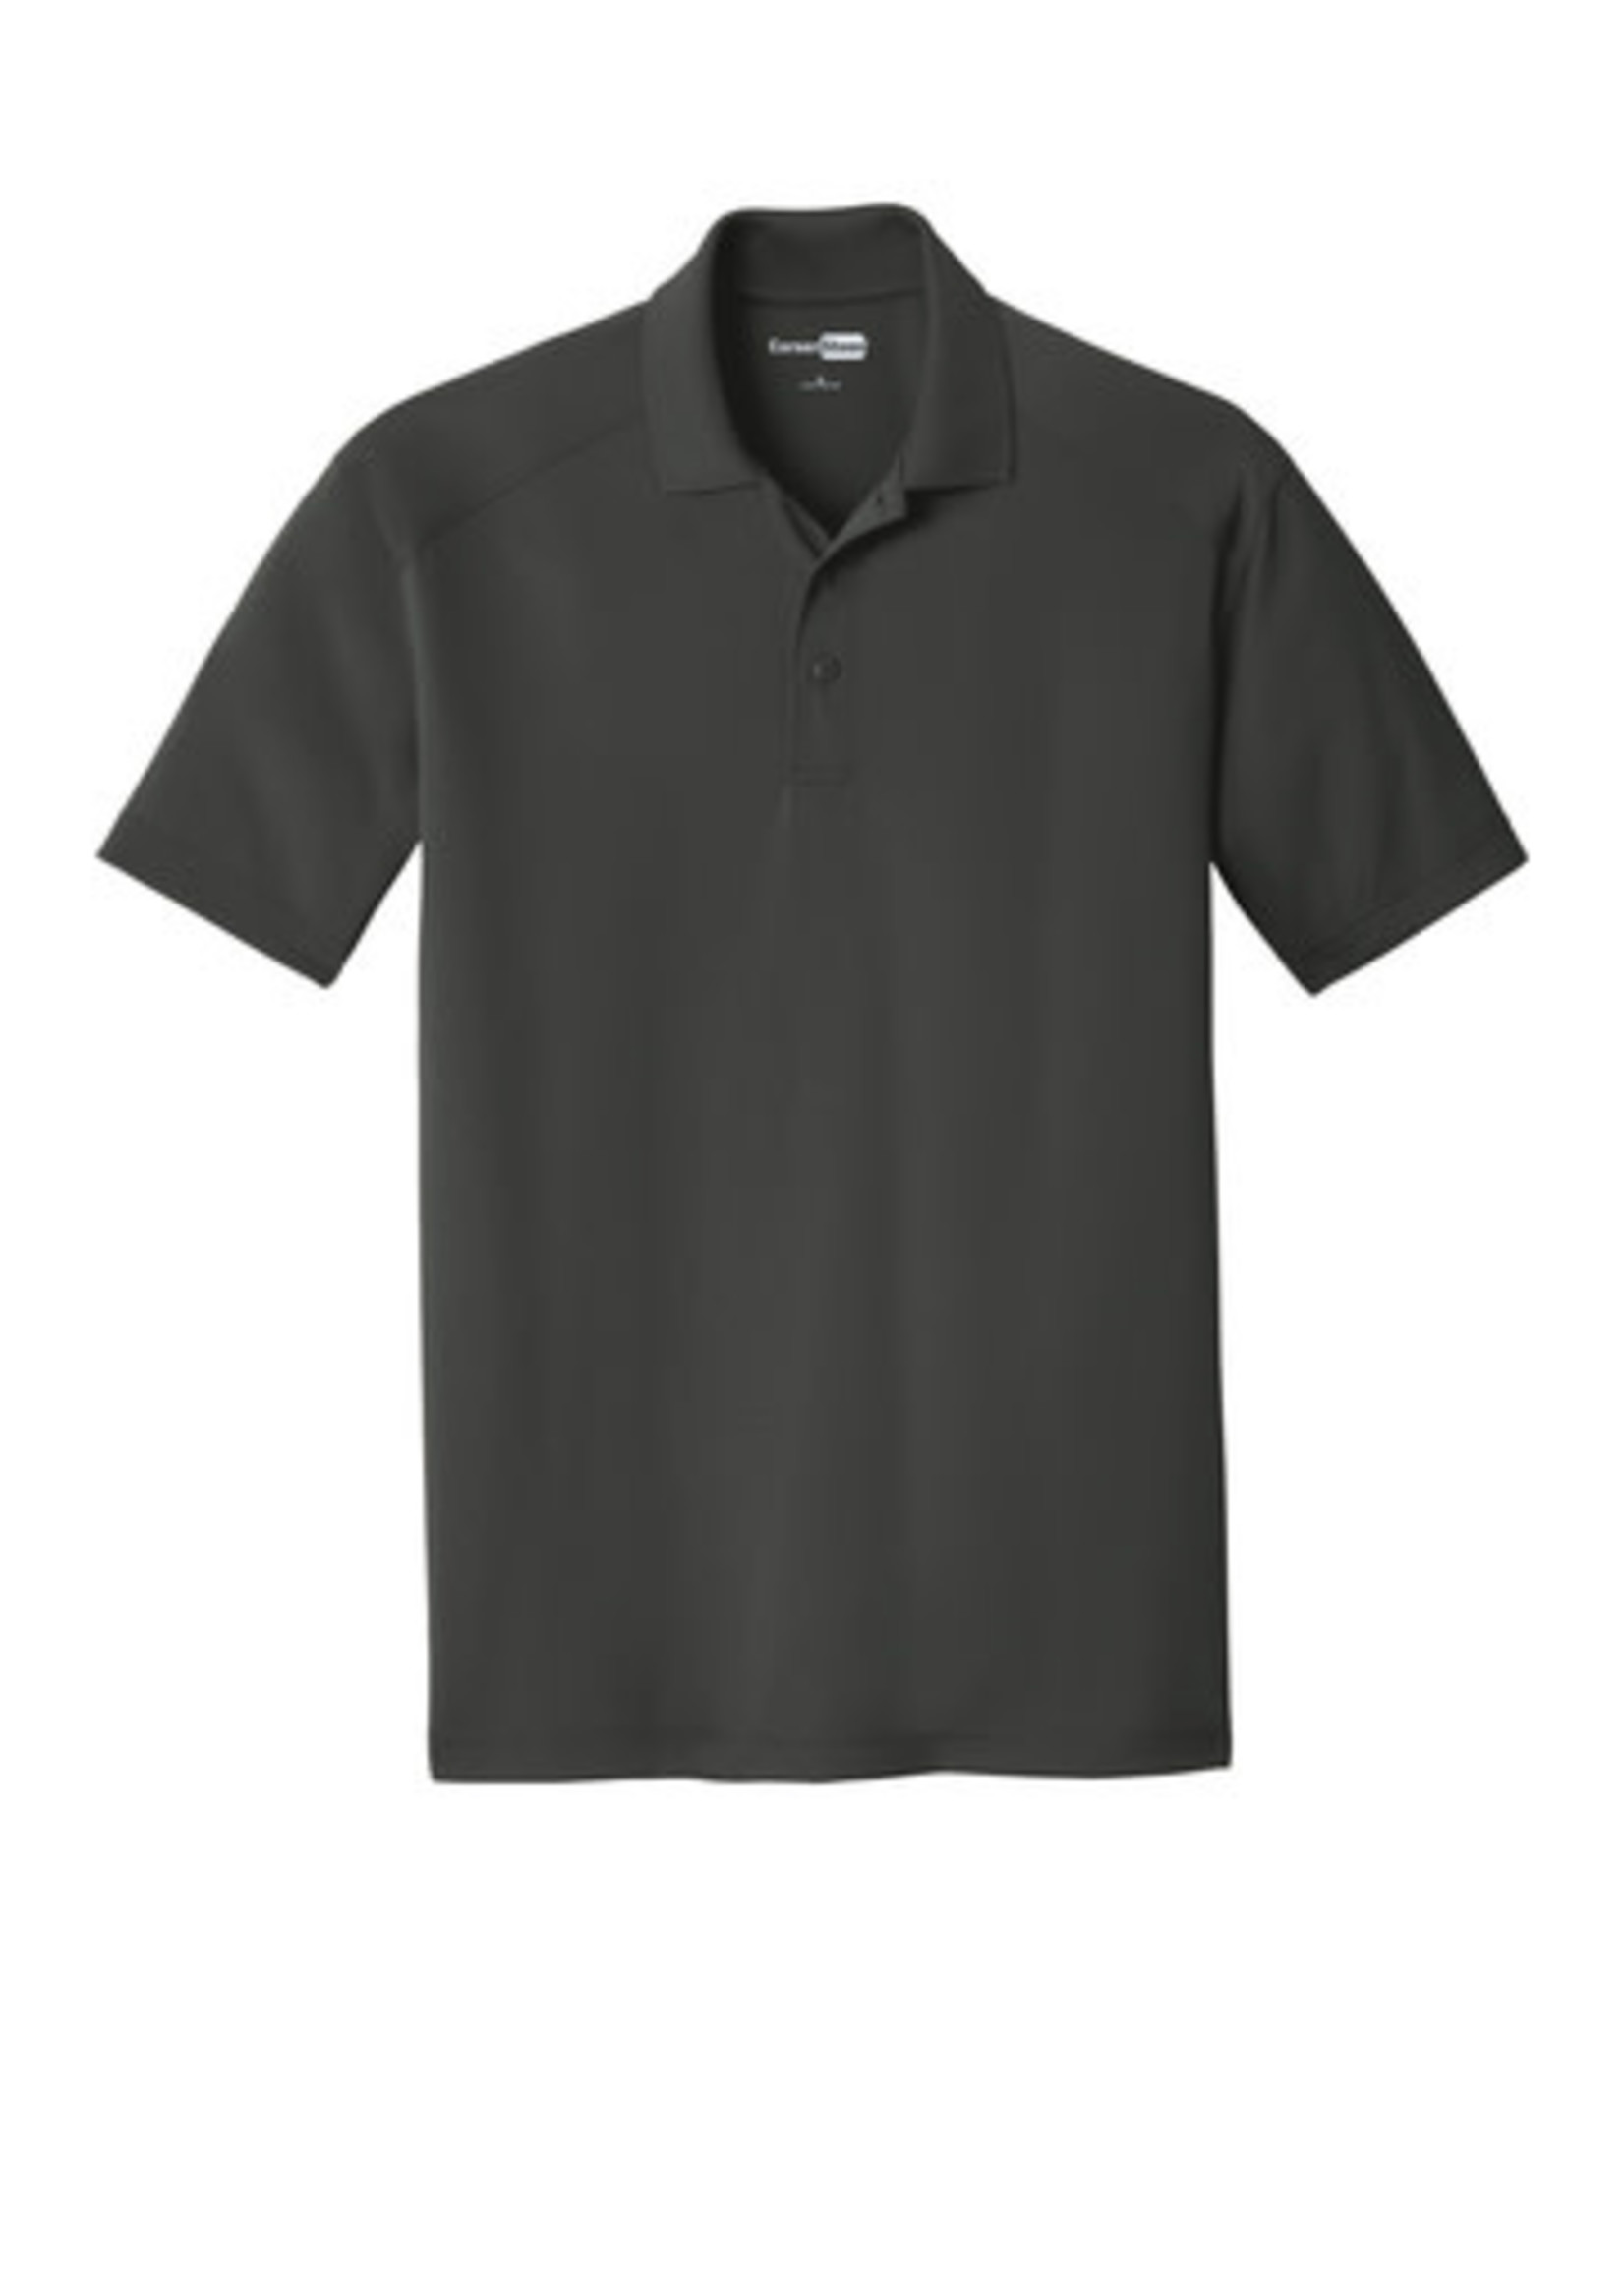 Adult Polo Shirt Charcoal L